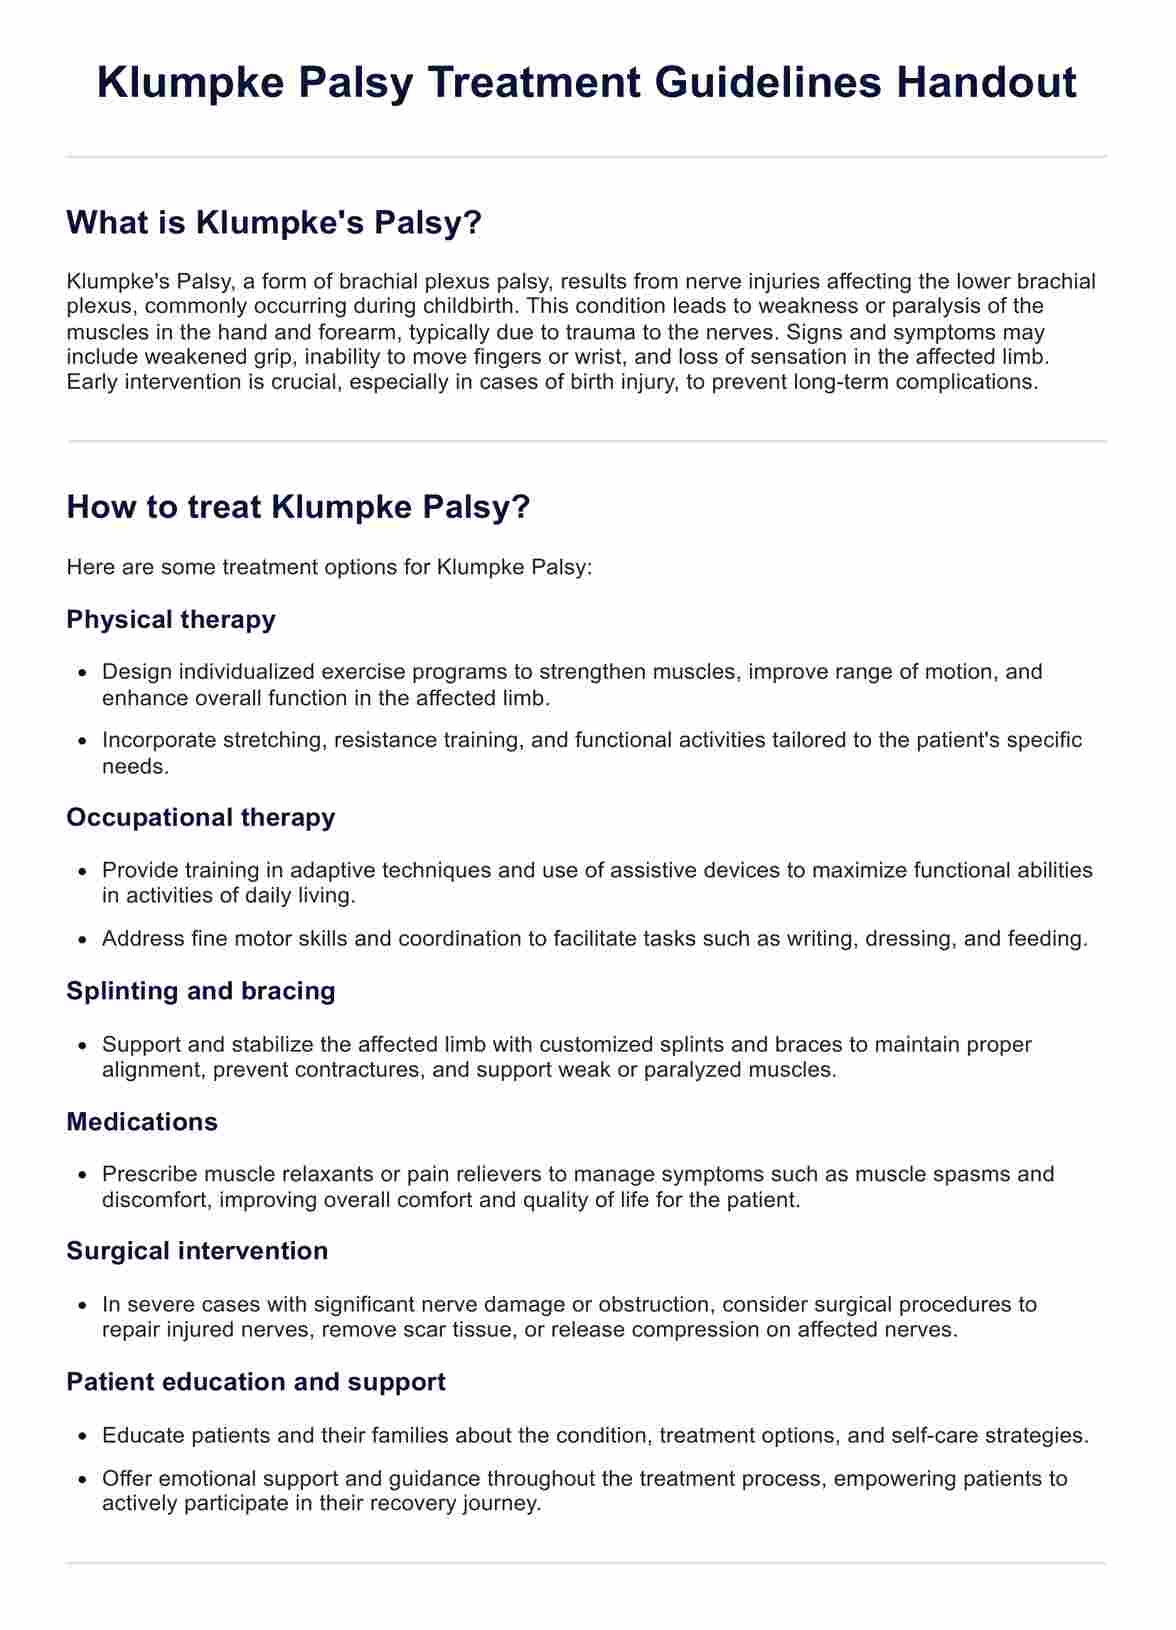 Klumpke Palsy Treatment Guidelines Handout PDF Example